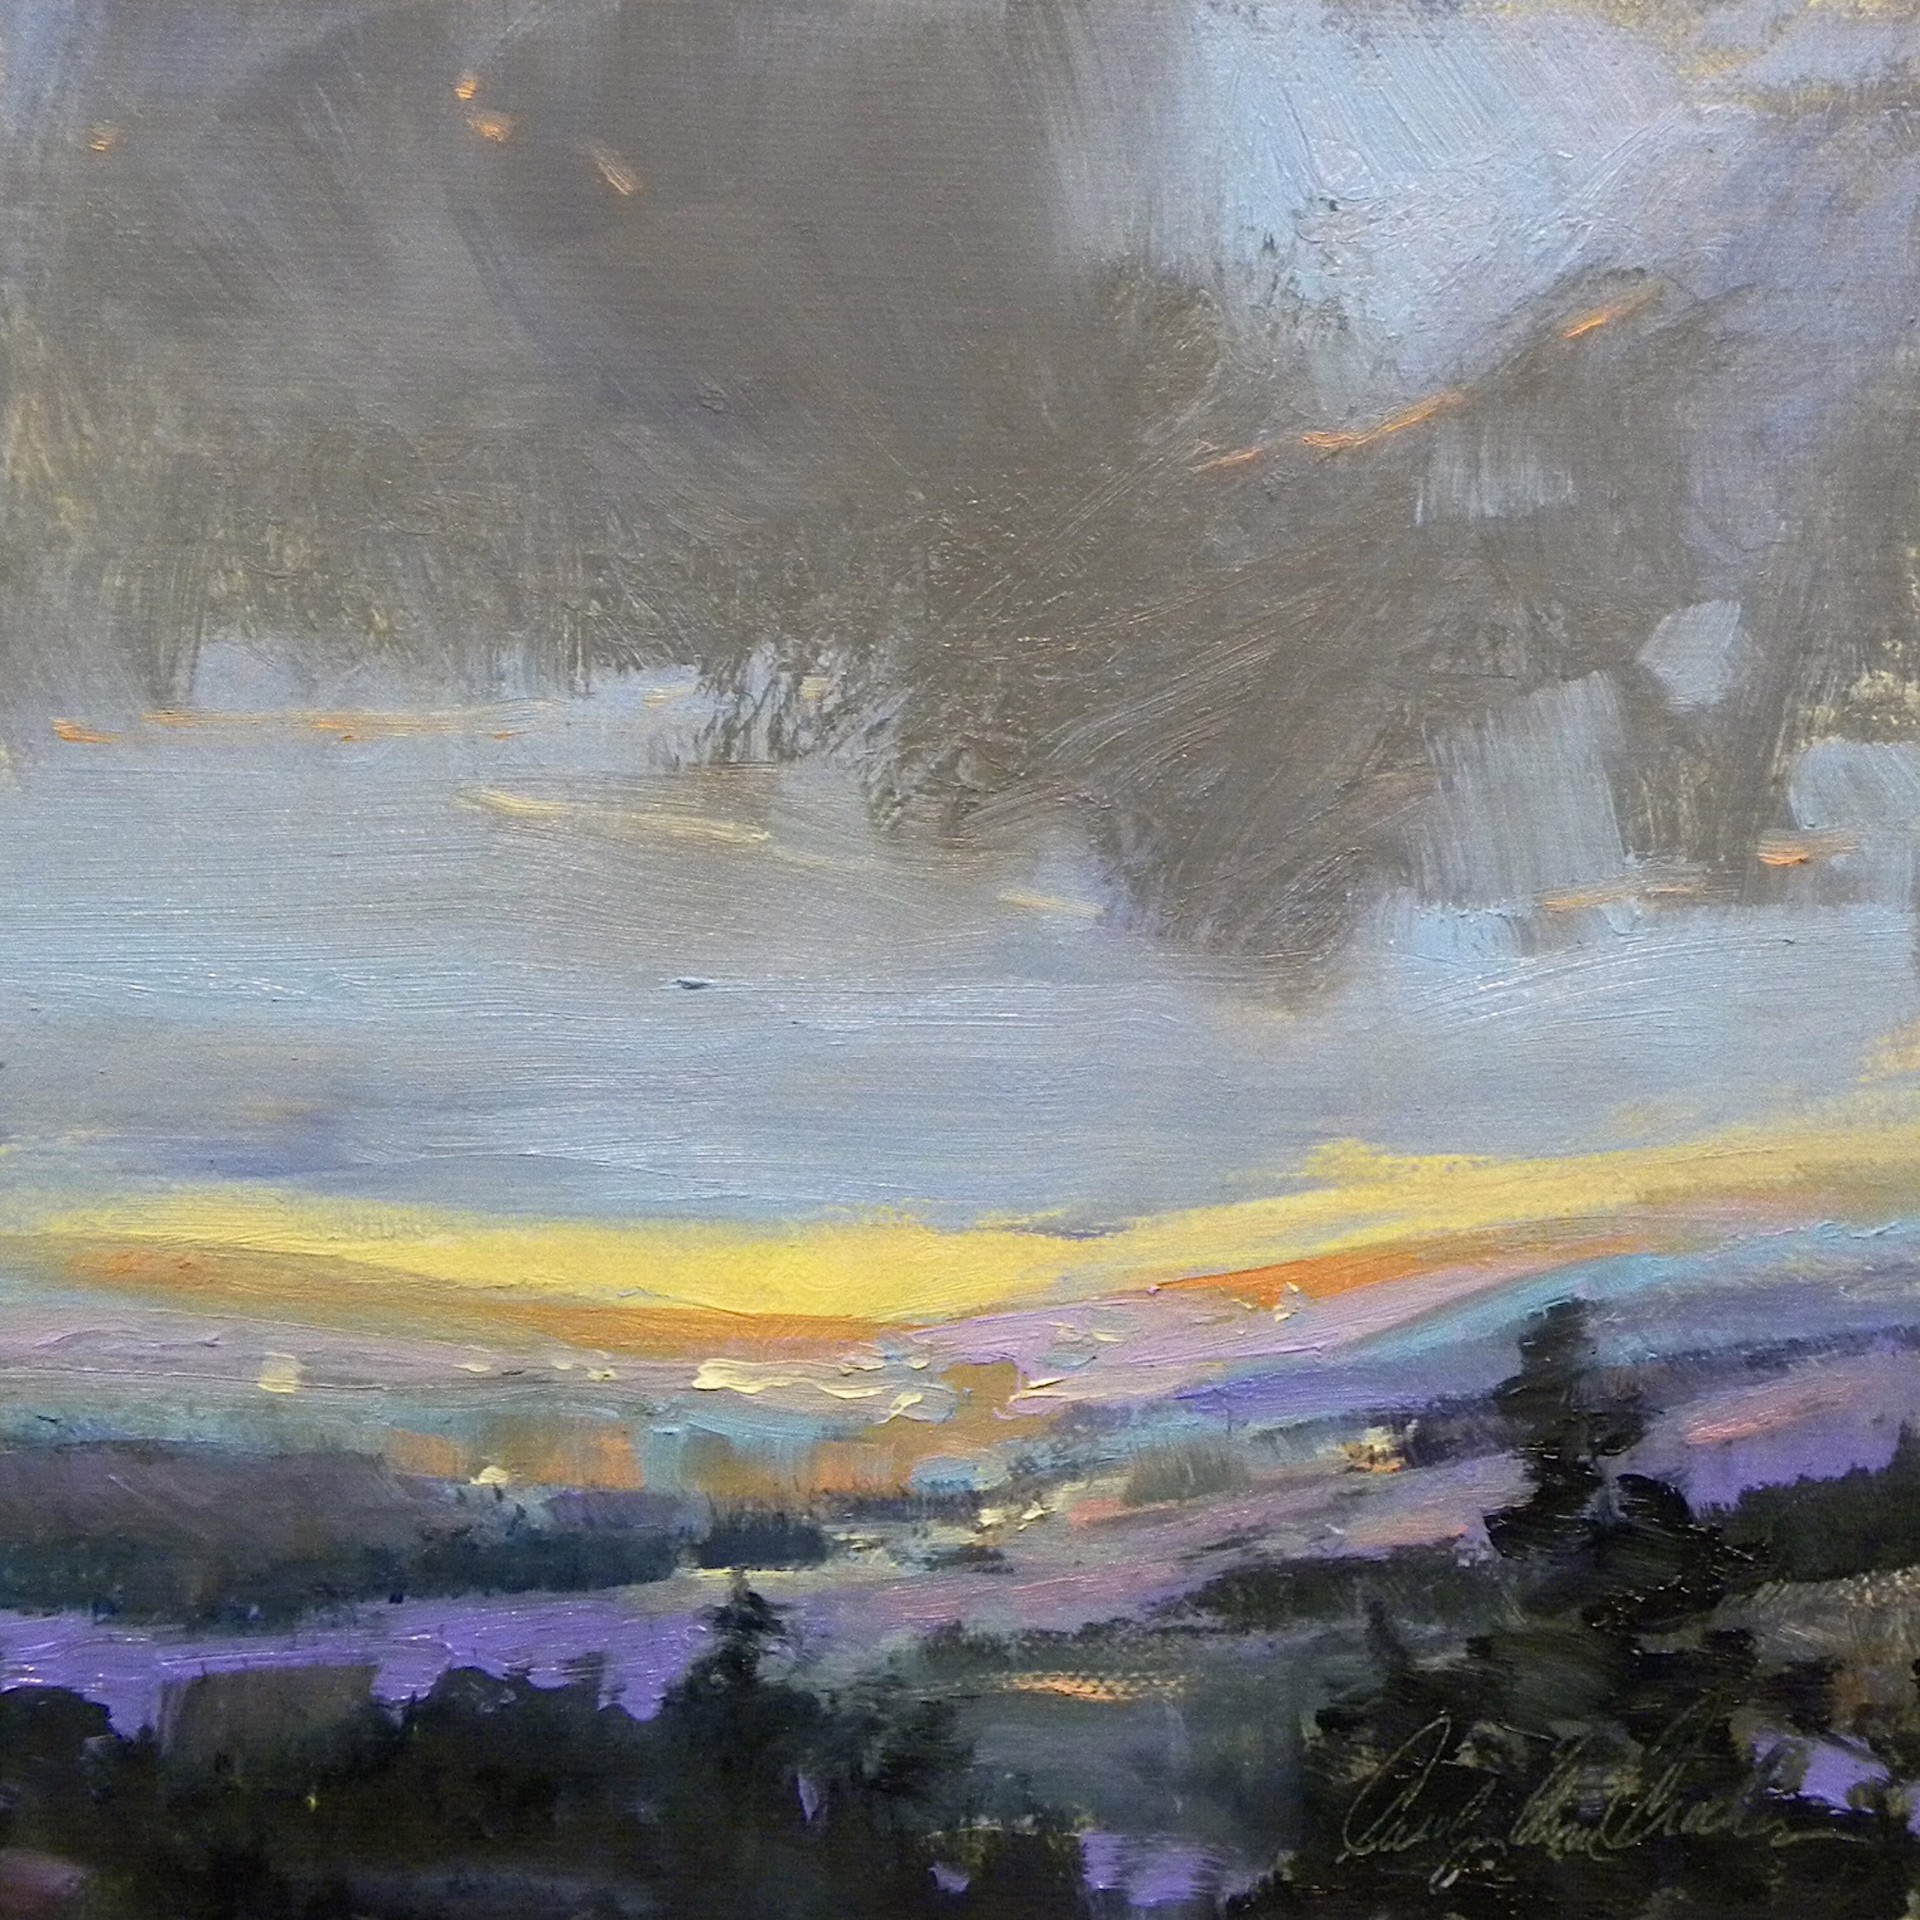 Evening Horizon by Carolyn Crocker (Rue)